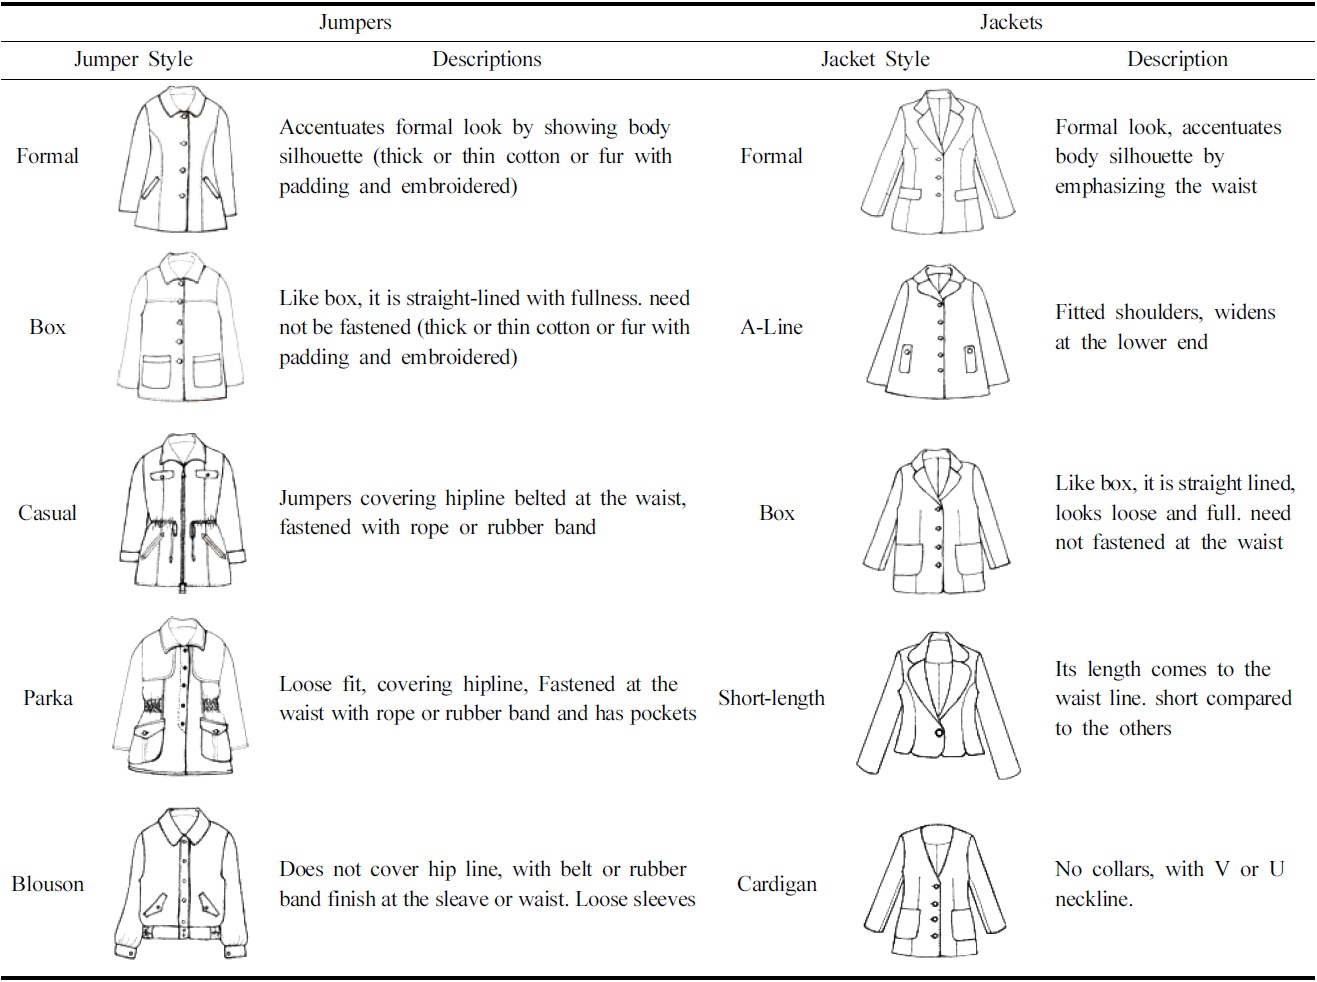 Descriptions of jumper & jacket style